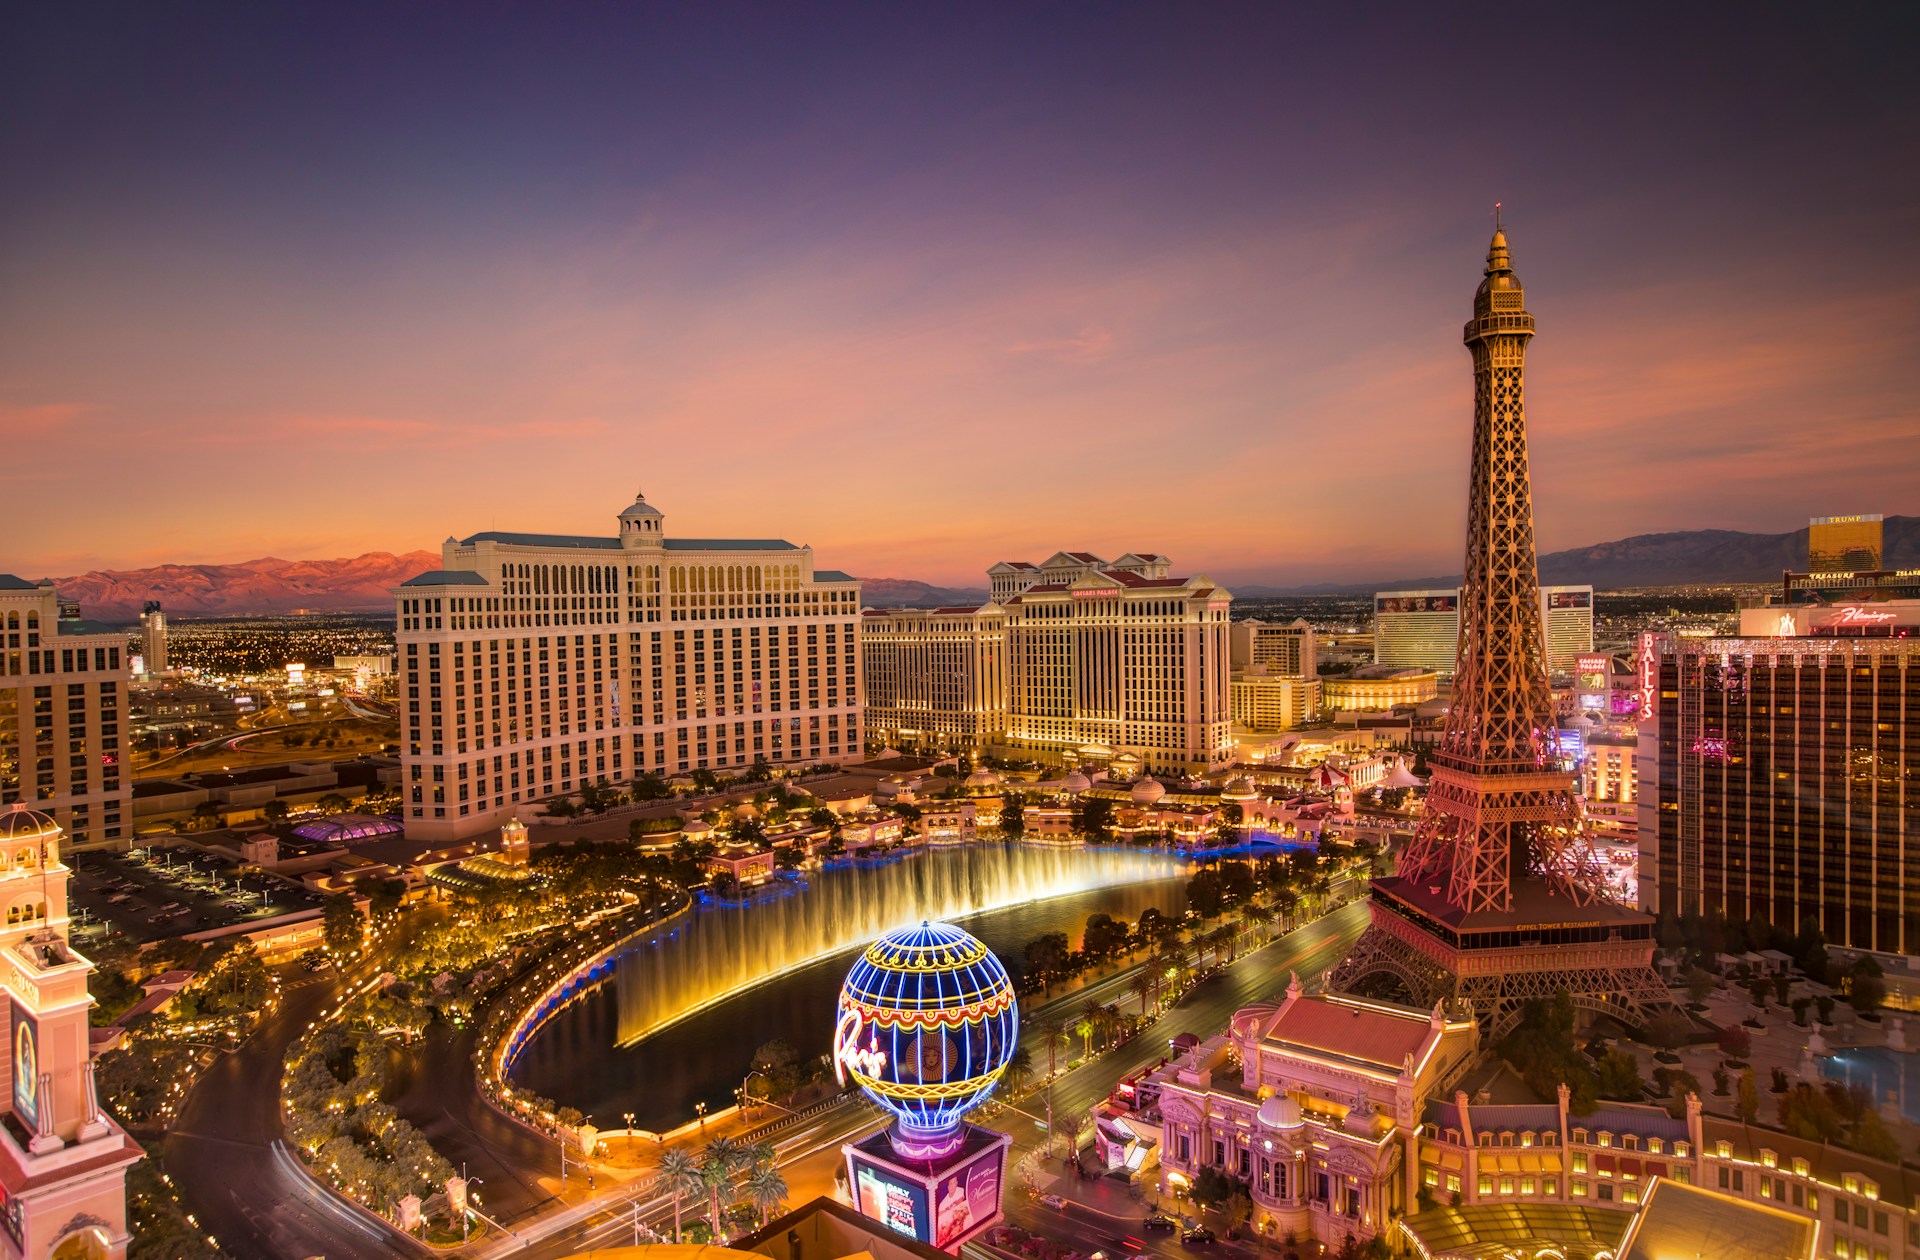 Las Vegas USA - The Entertainment Capital of the World